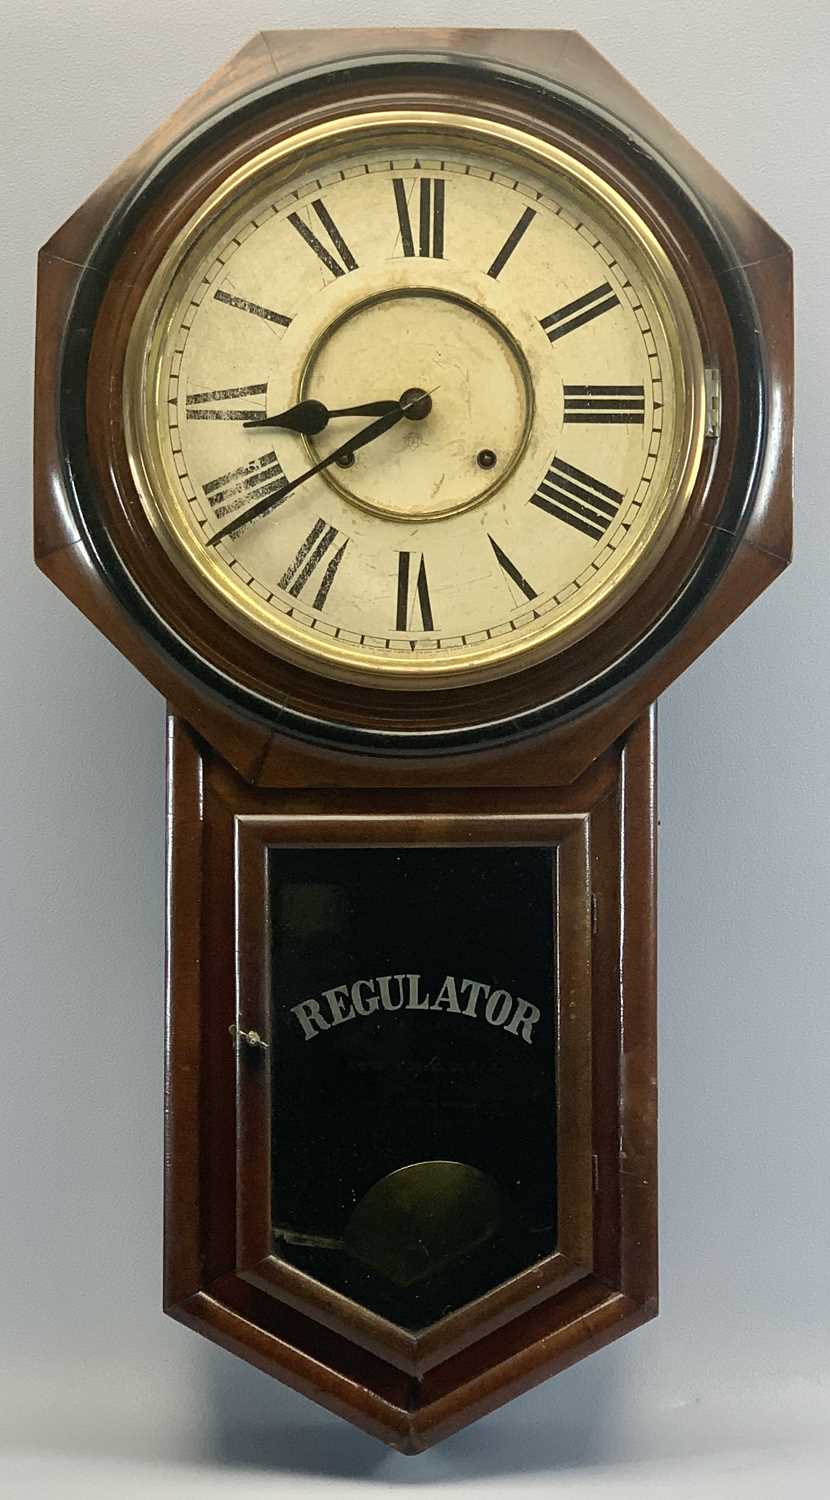 ANSONIA CLOCK COMPANY NEW YORK MAHOGANY CASED REGULATOR WALL CLOCK - late 19th century, circular